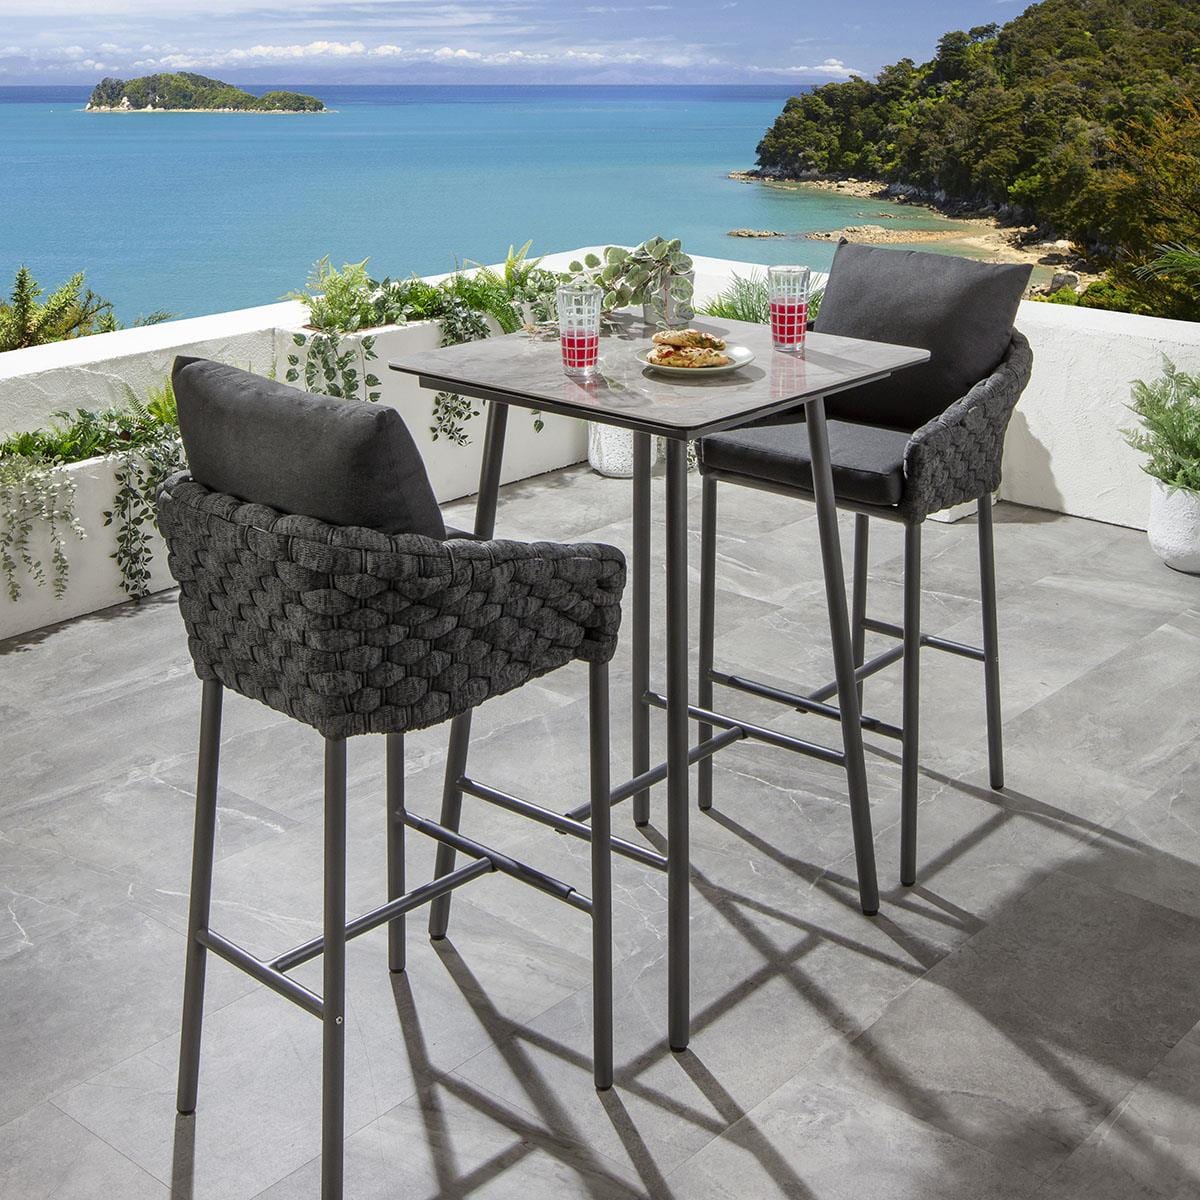 Quatropi Sundowner 2 Seater Ceramic Garden Bar Set Charcoal & Grey